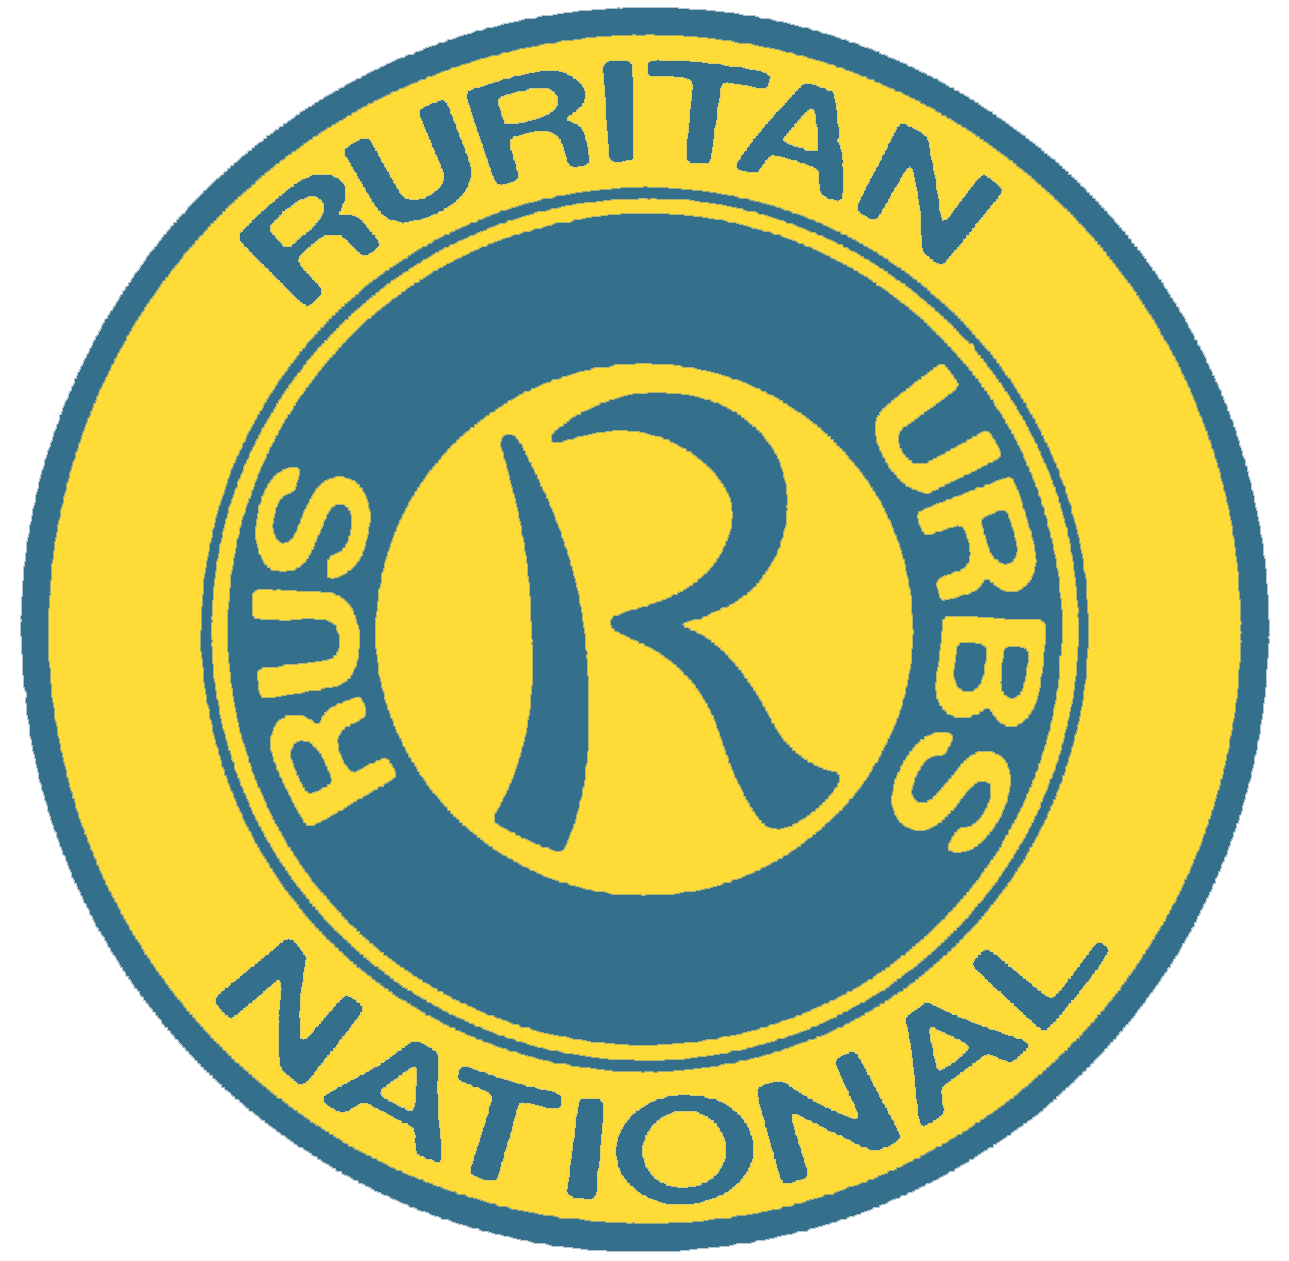 Efland Ruritan Club